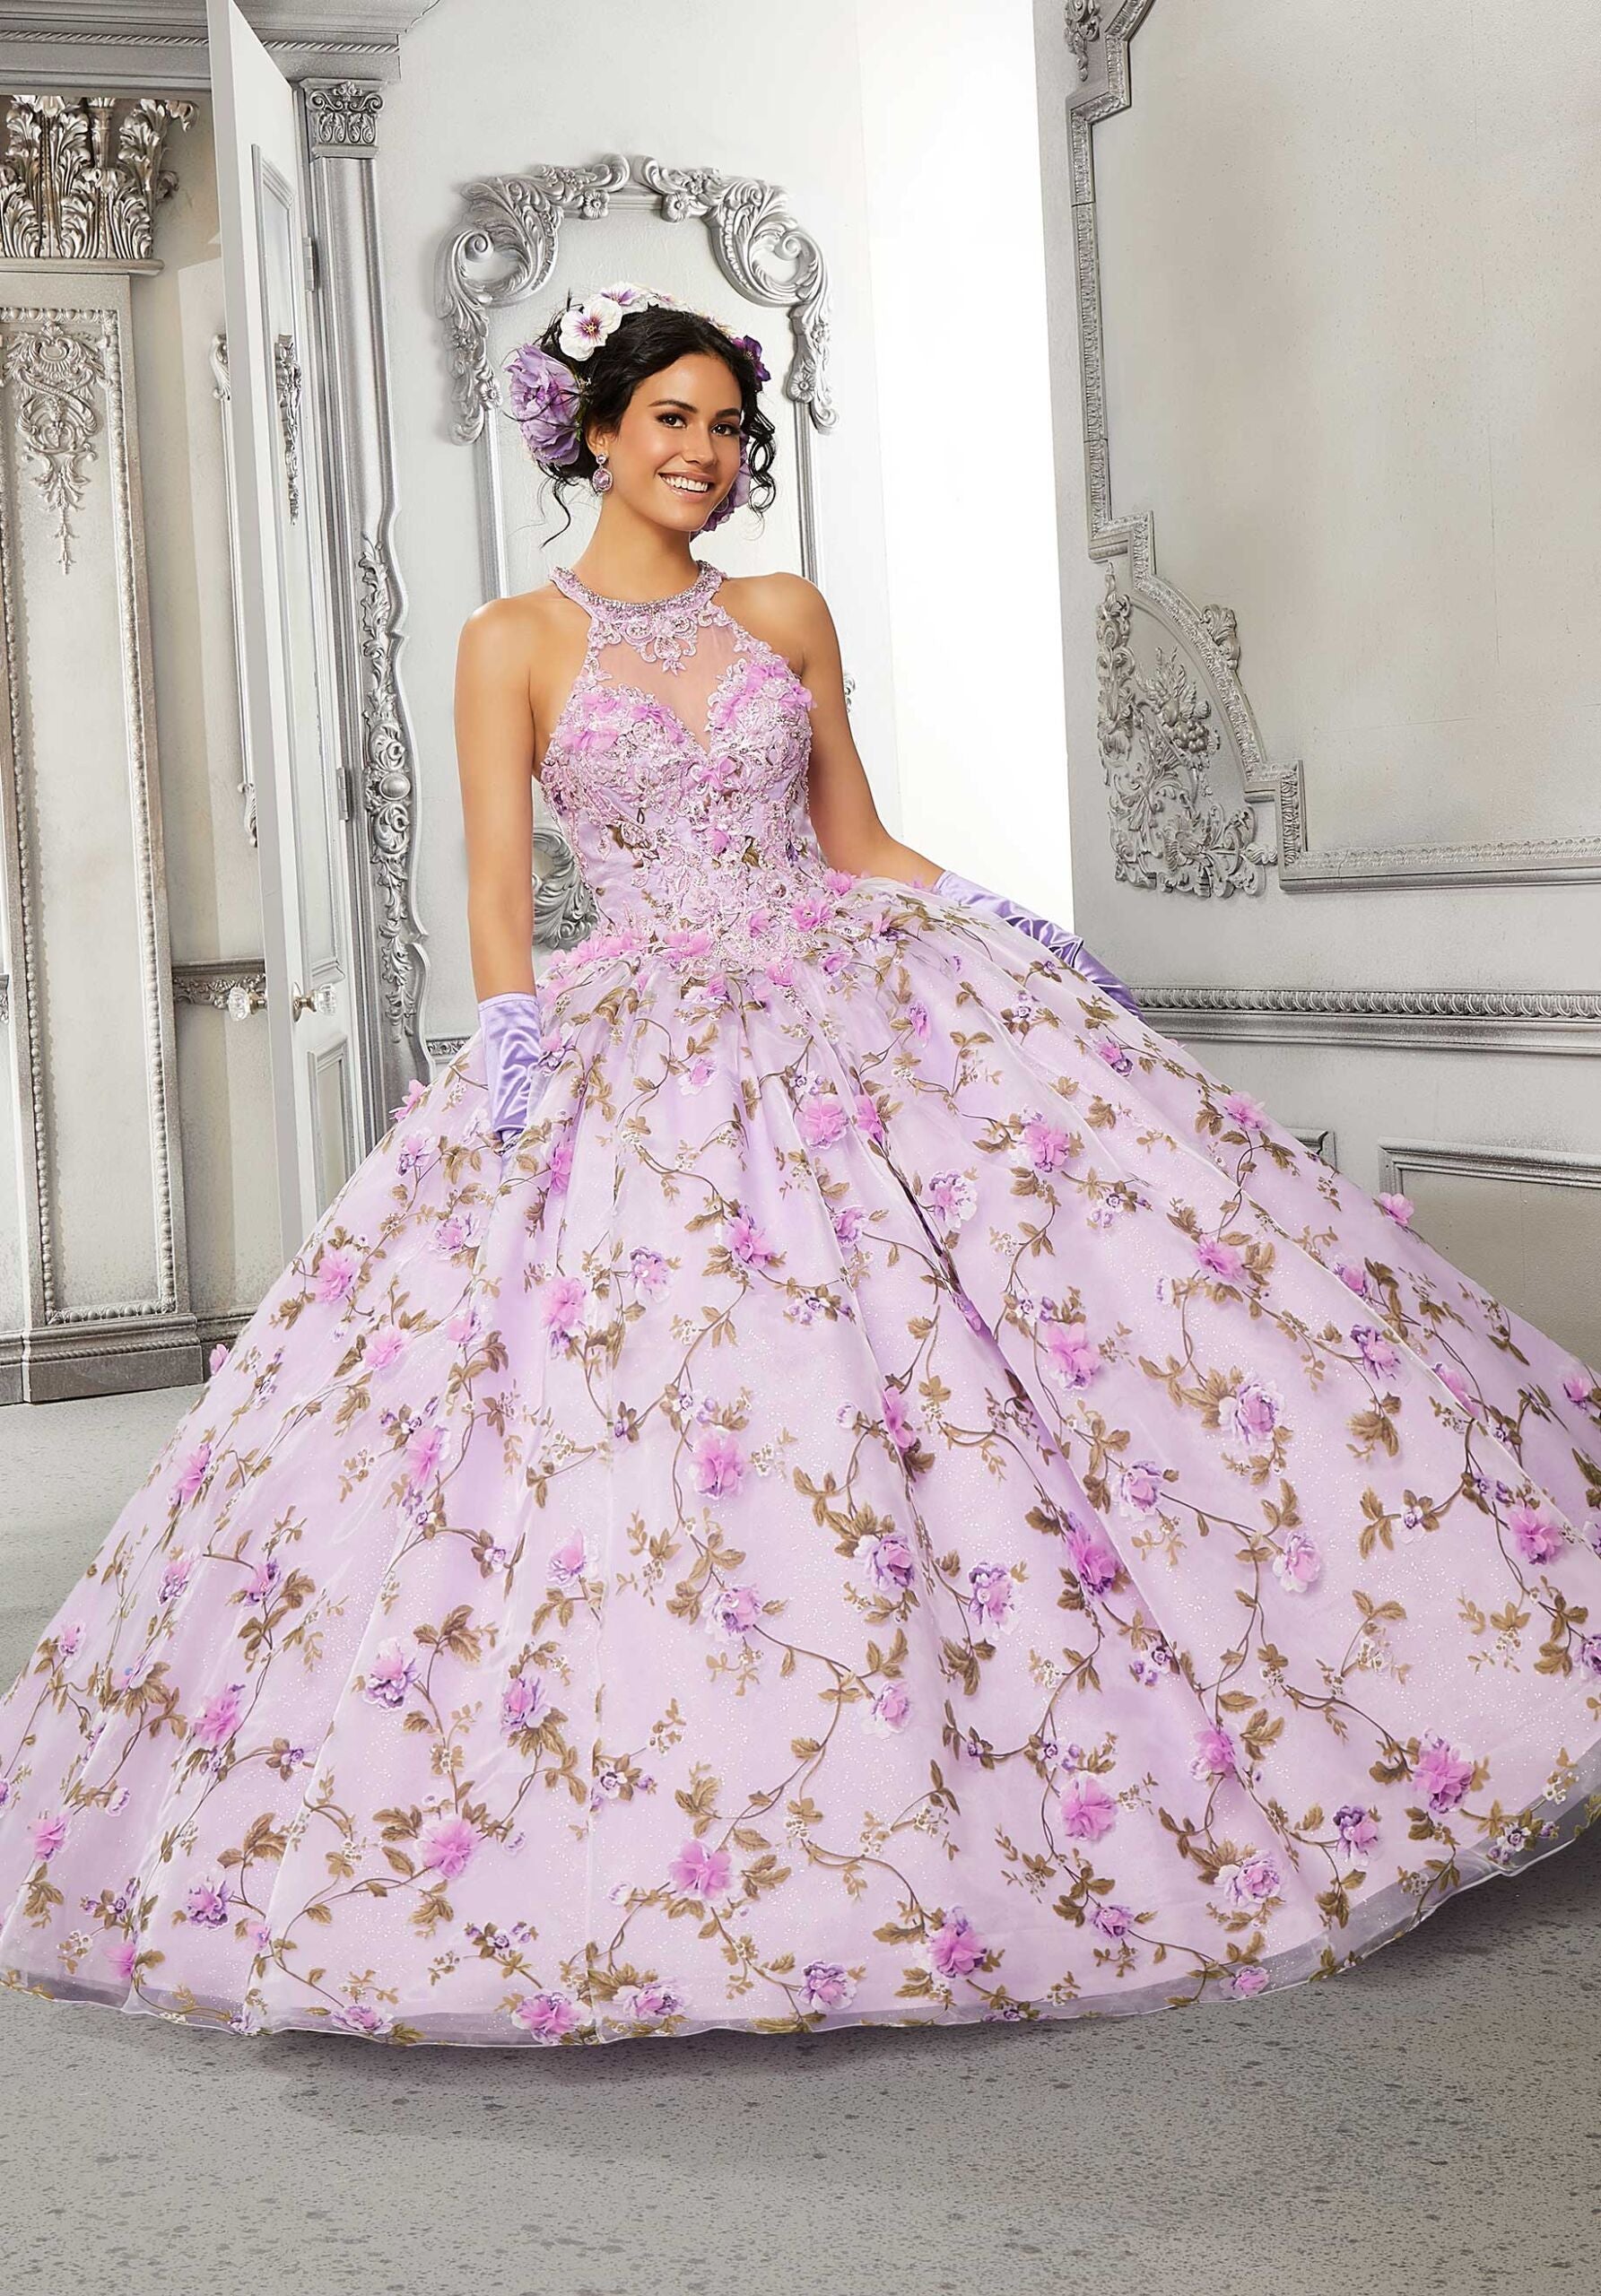 Three-Dimensional Floral Patterned Organza Quinceañera Dress